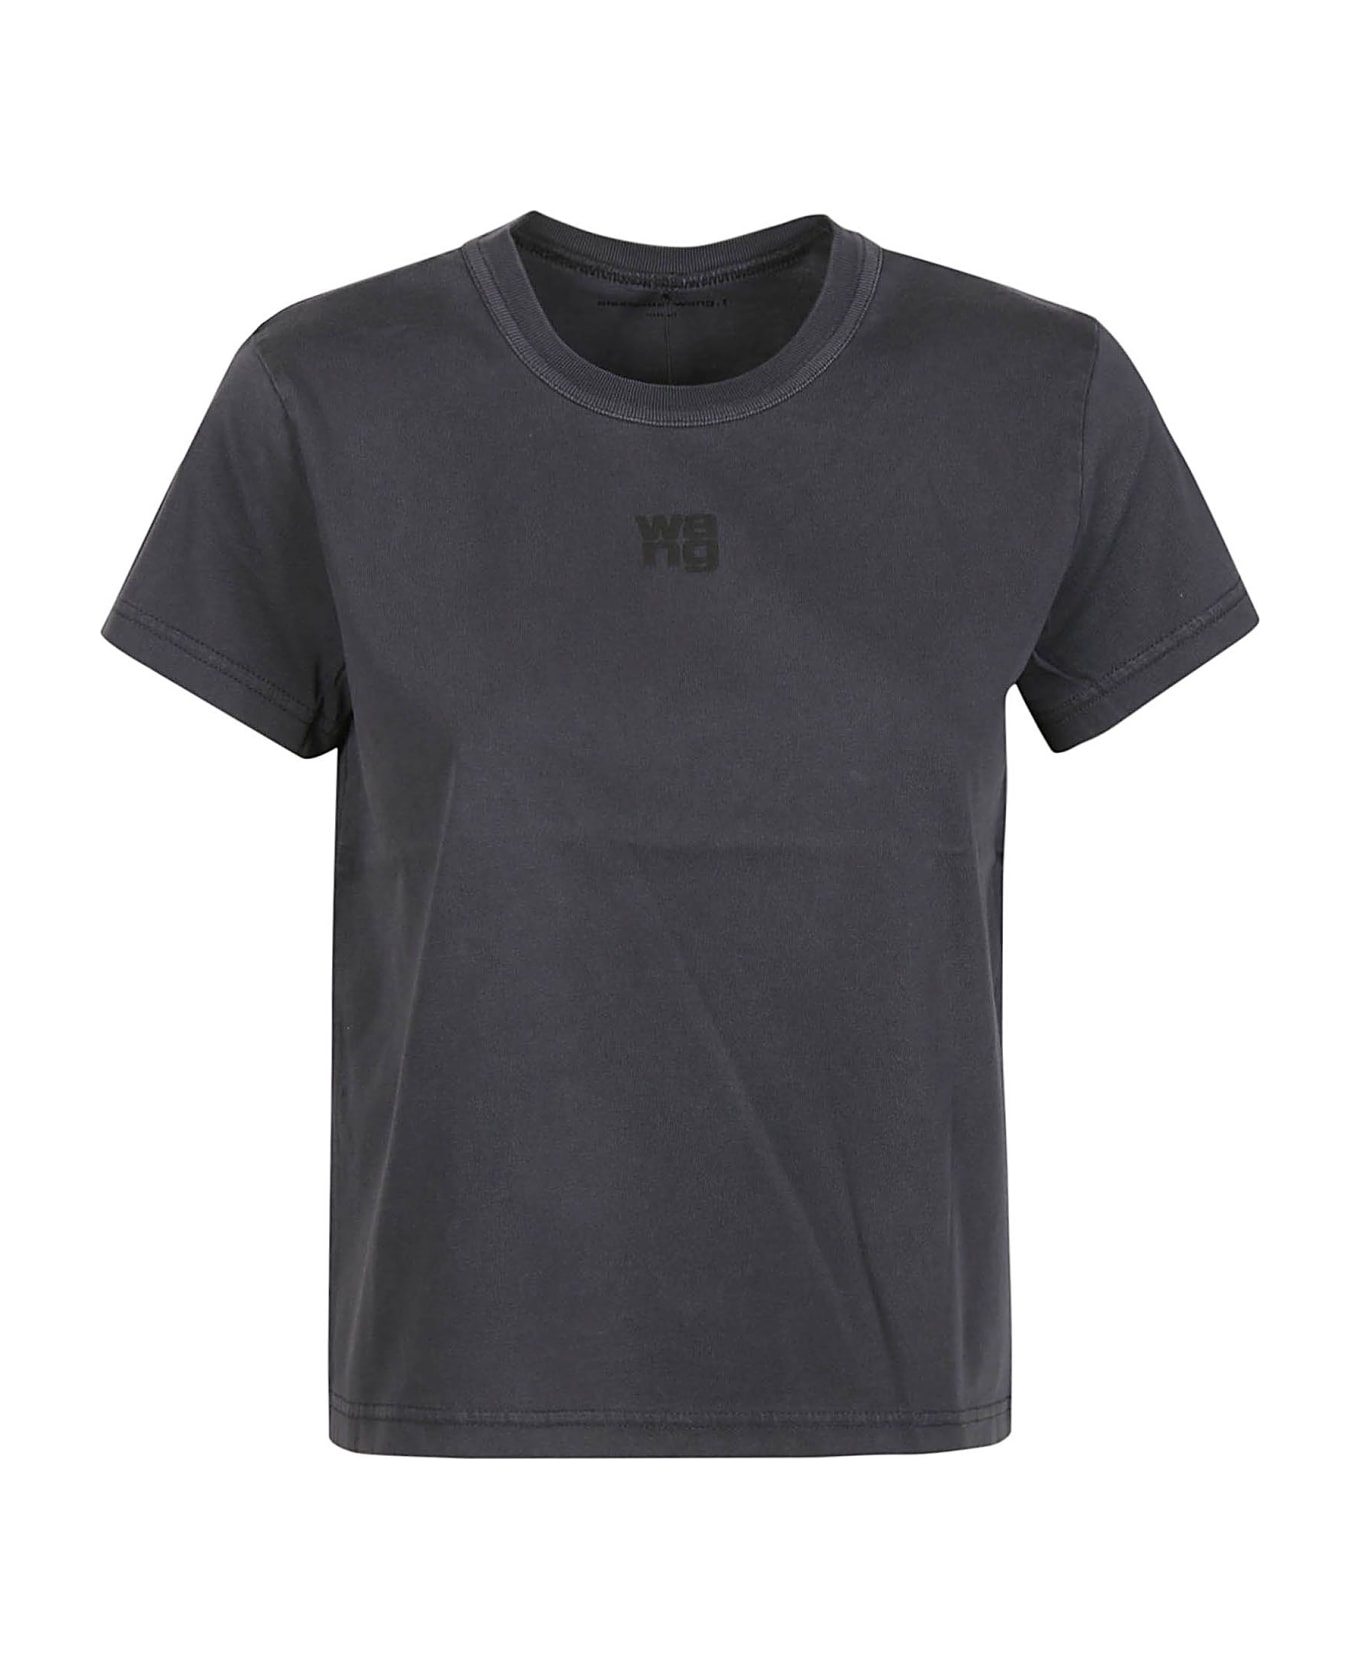 T by Alexander Wang Puff Logo Bound Neck Essential Shrunk T-shirt - A Soft Obsidian